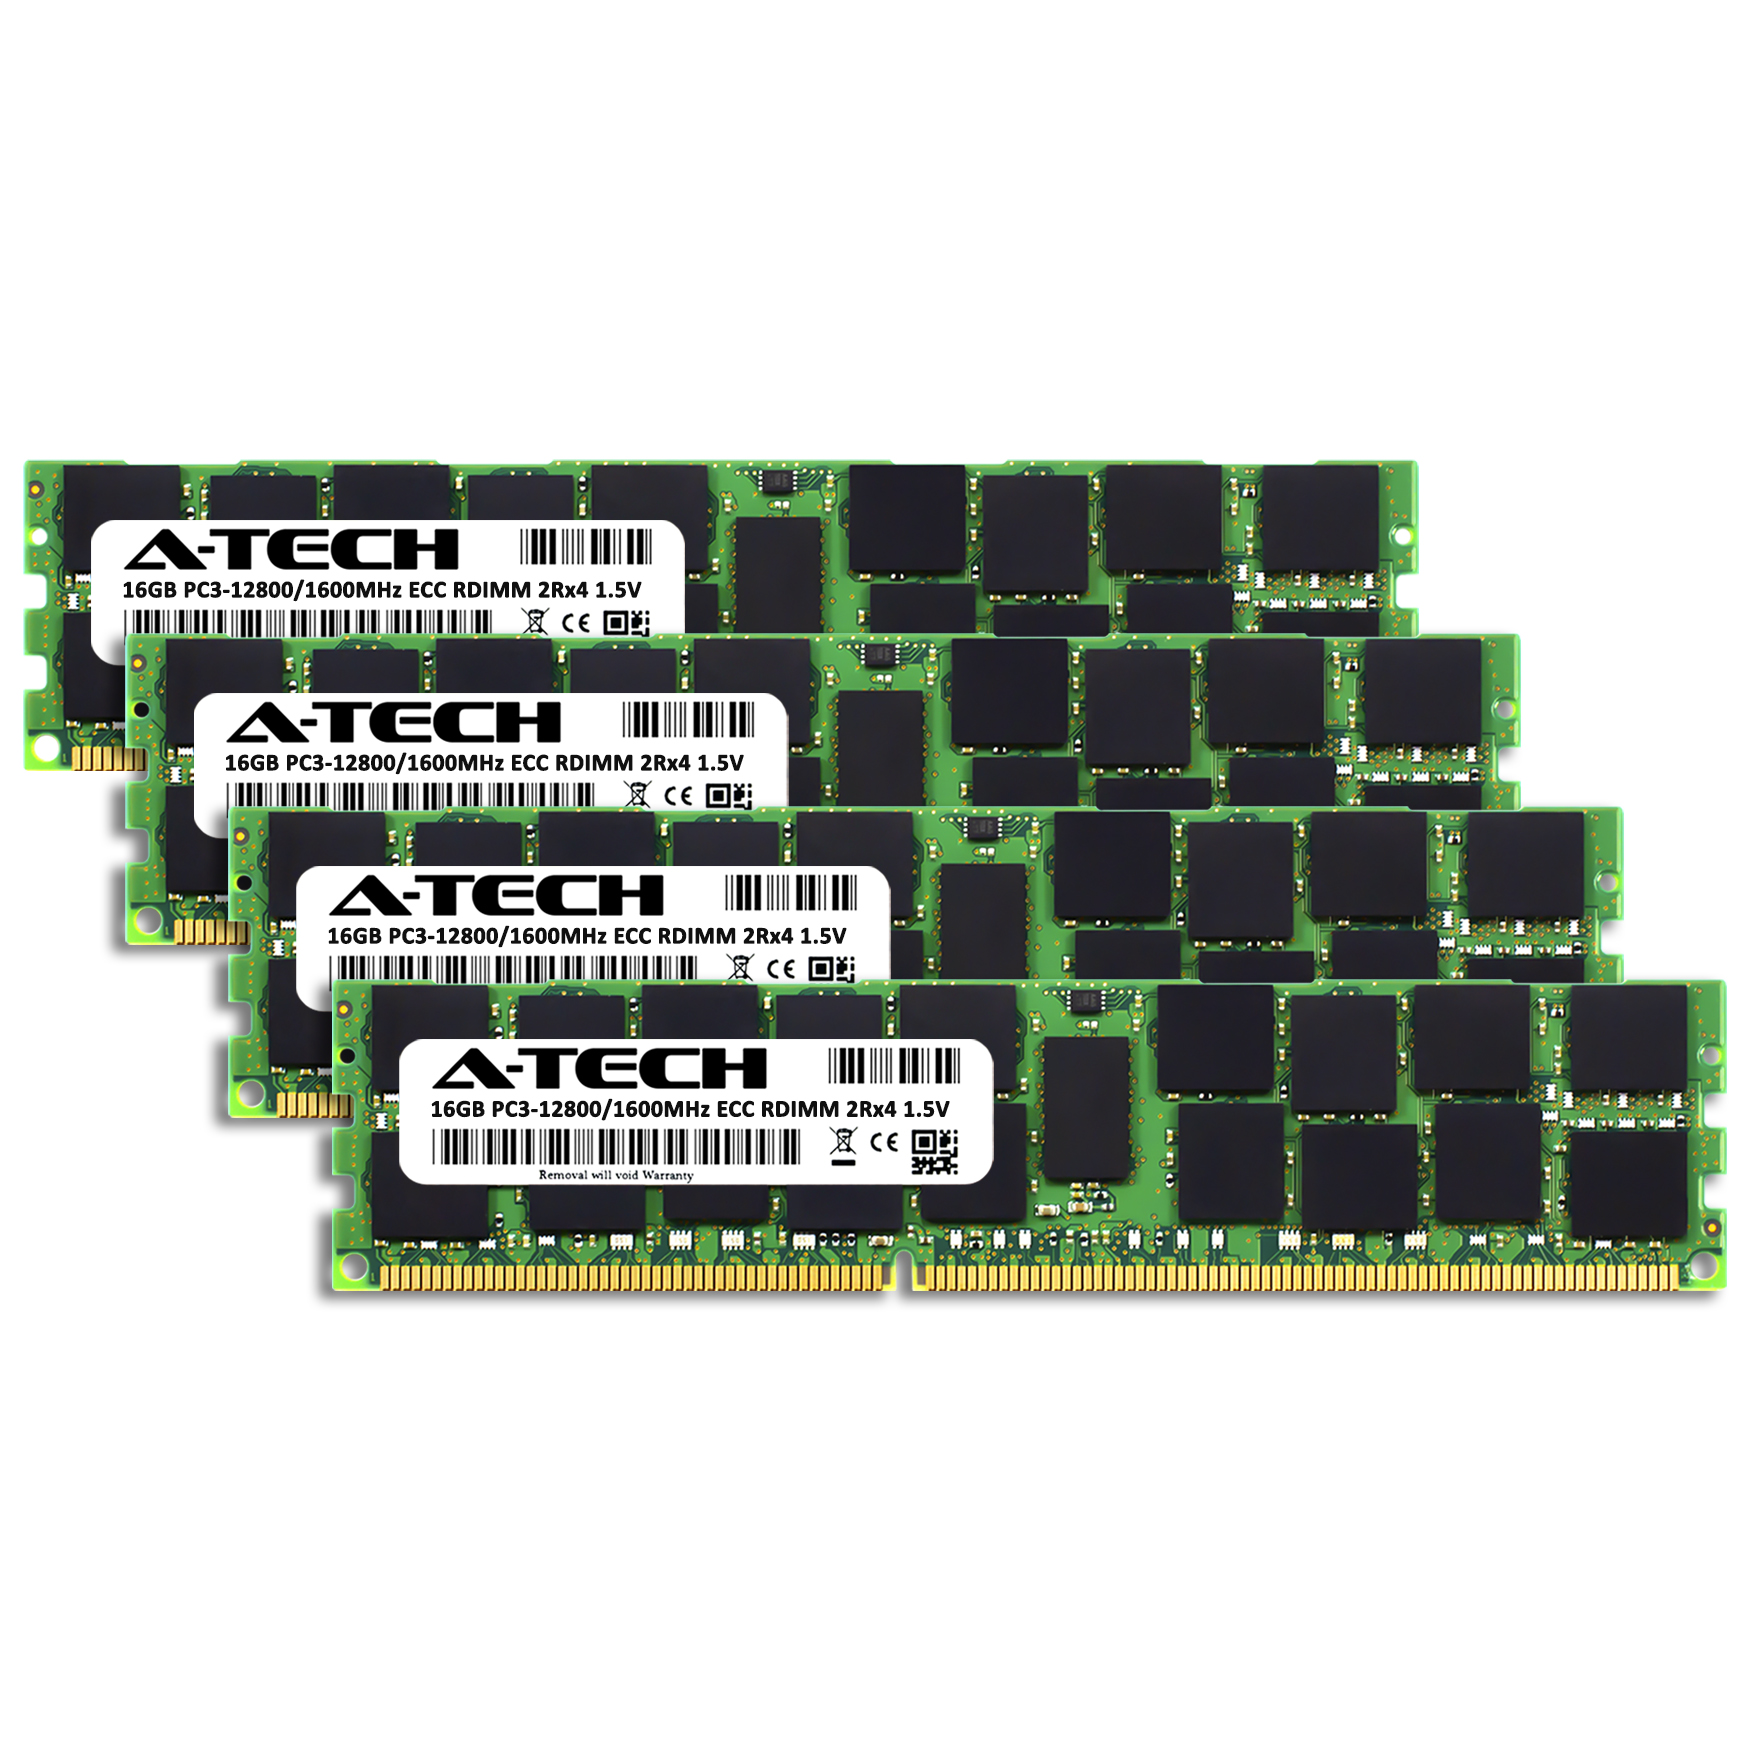 64GB 4x PC3-12800R RDIMM Supermicro X9DA7 Memory RAM | Being Patient